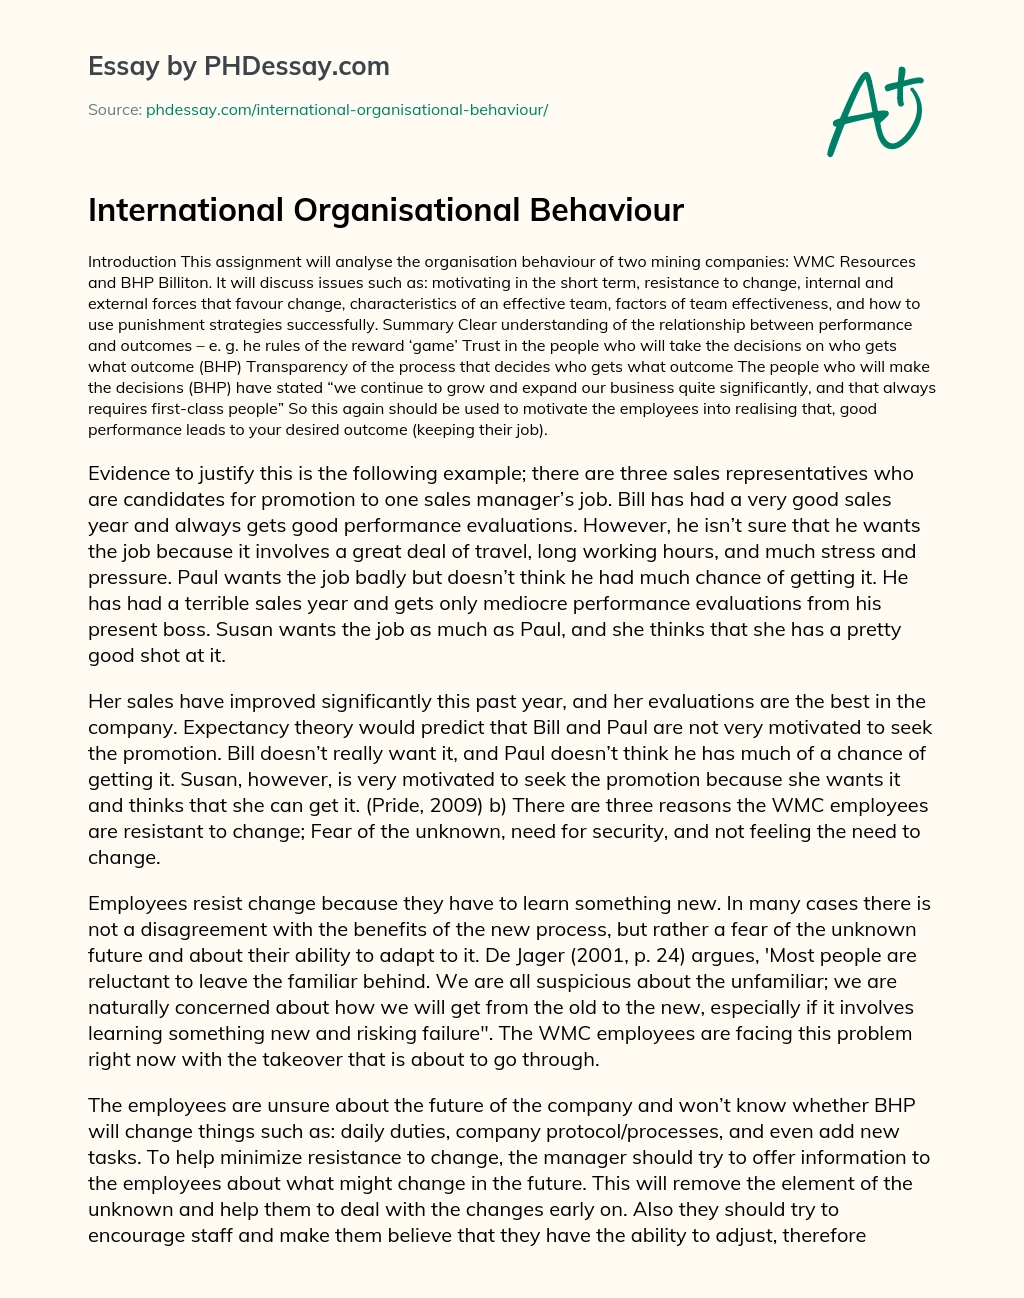 International Organisational Behaviour essay